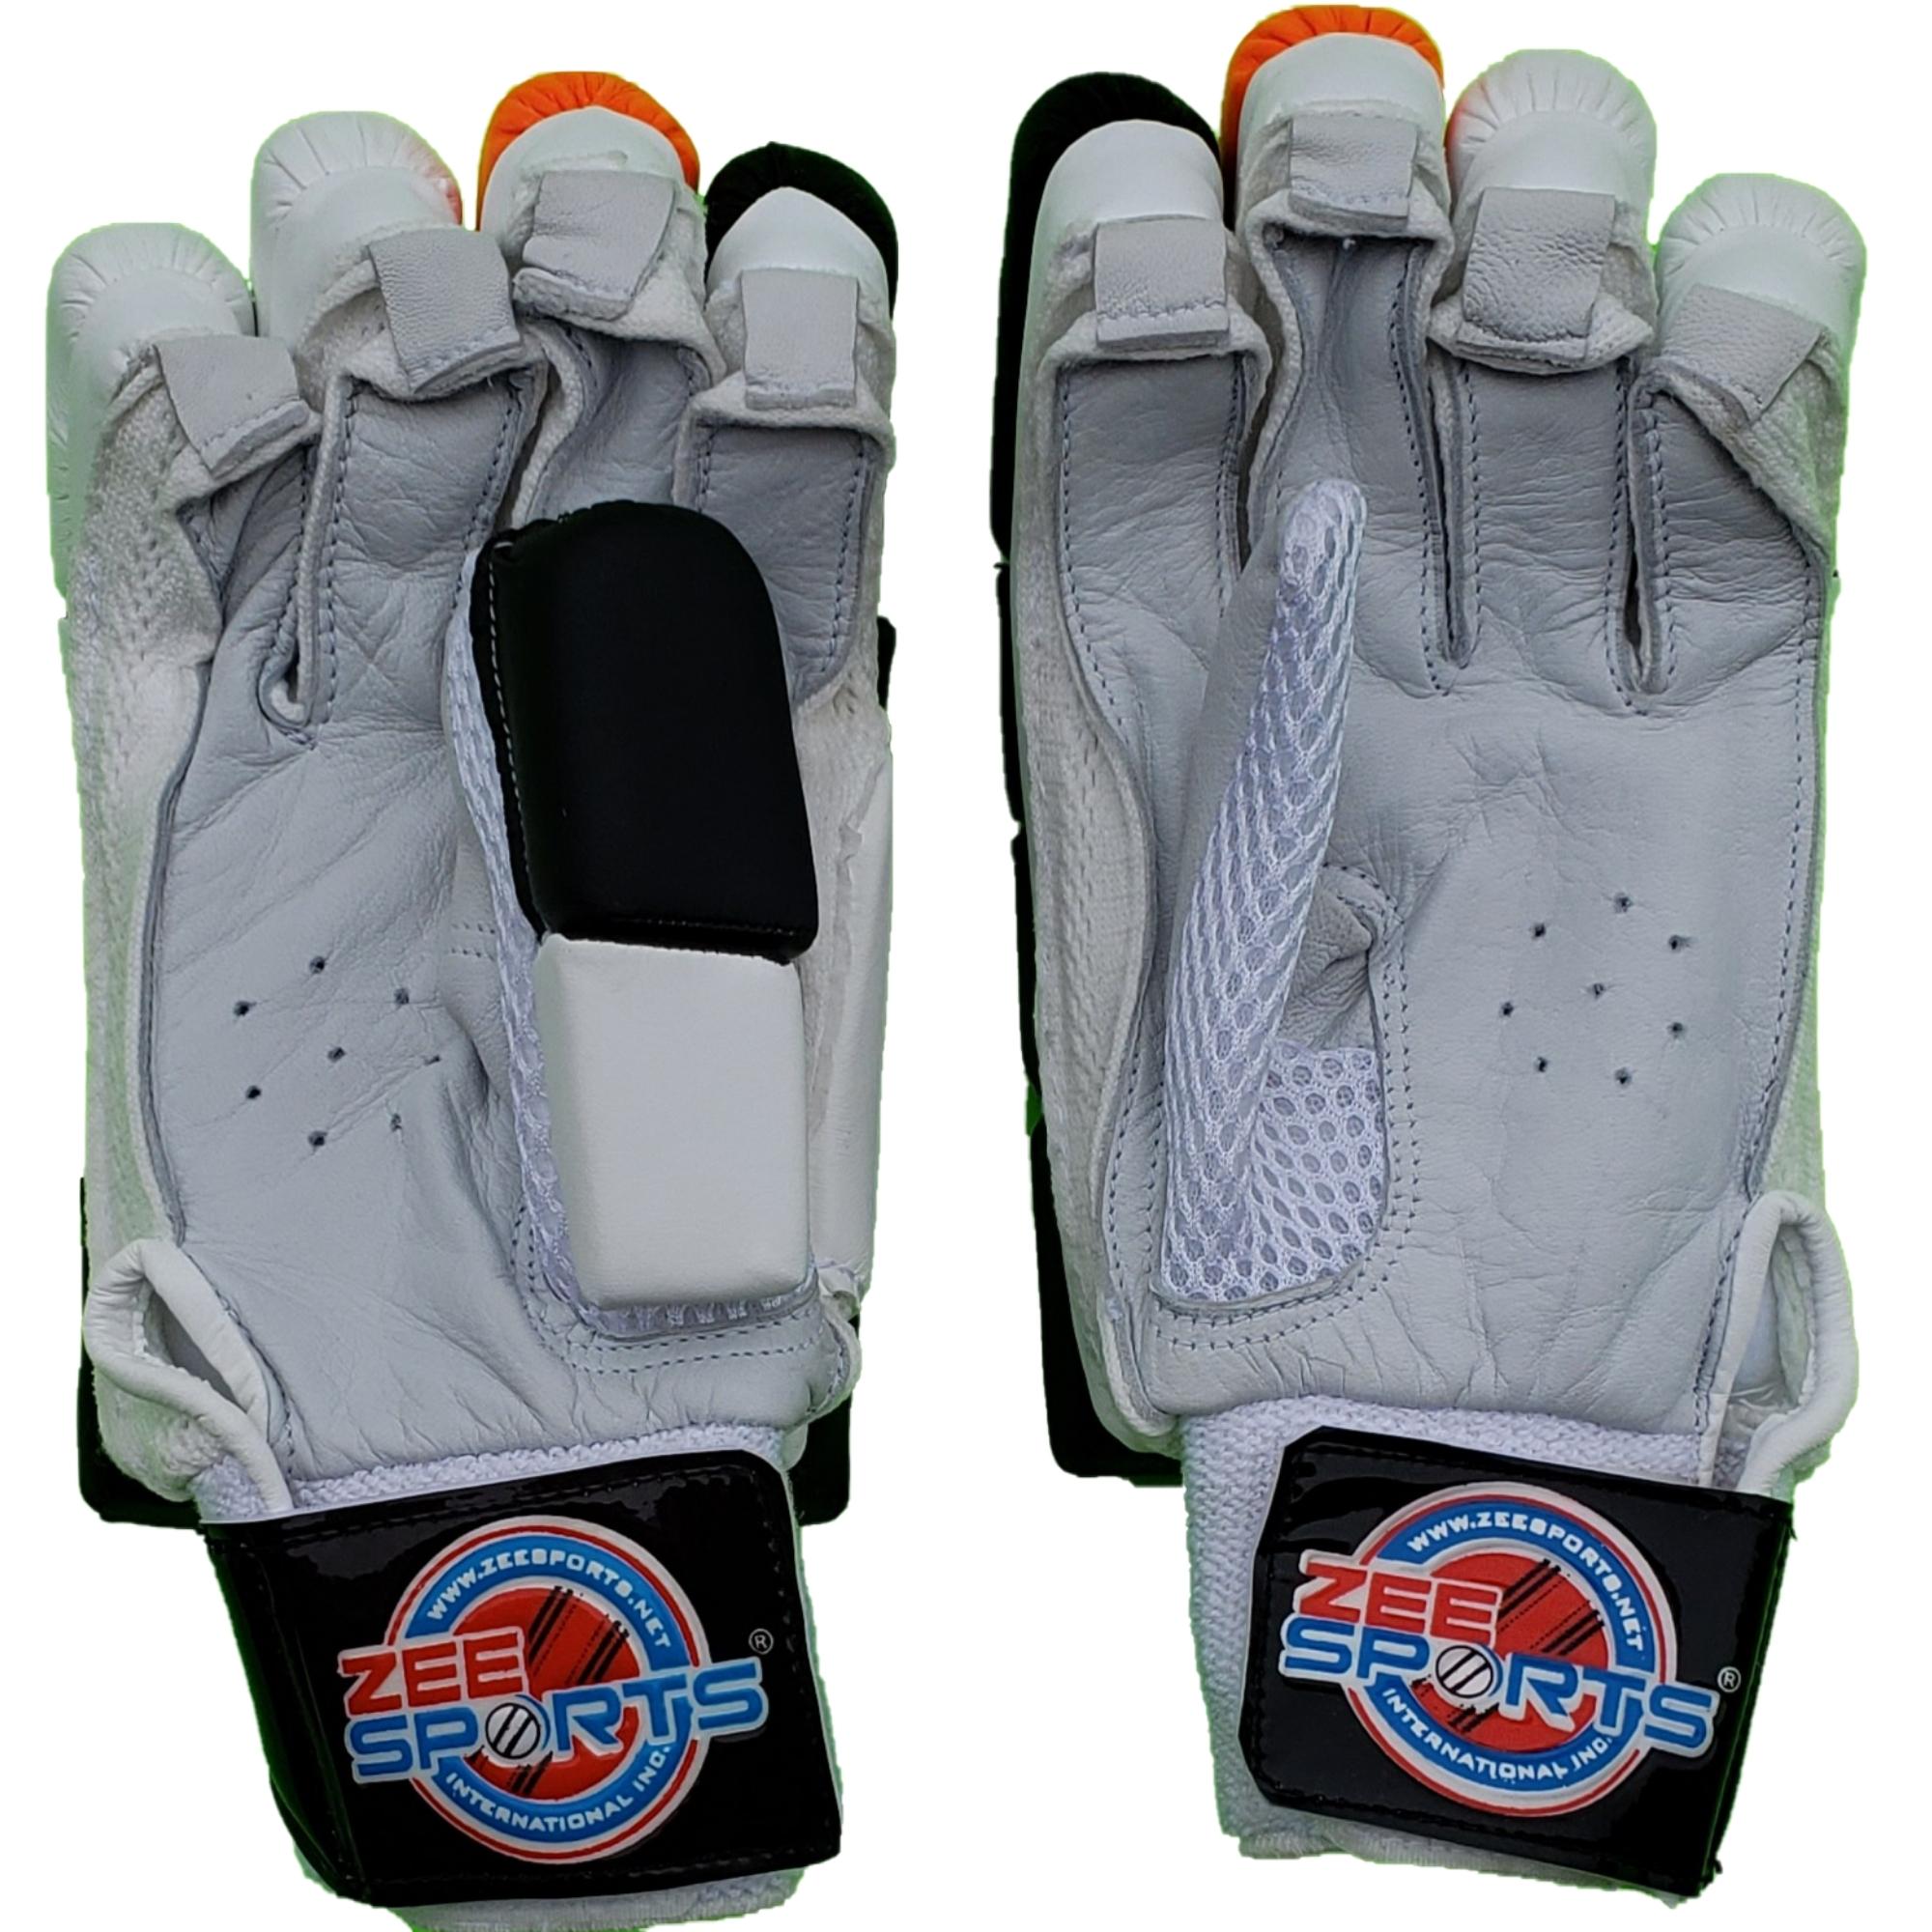 Zee Sports Youth Orange Black Batting Gloves